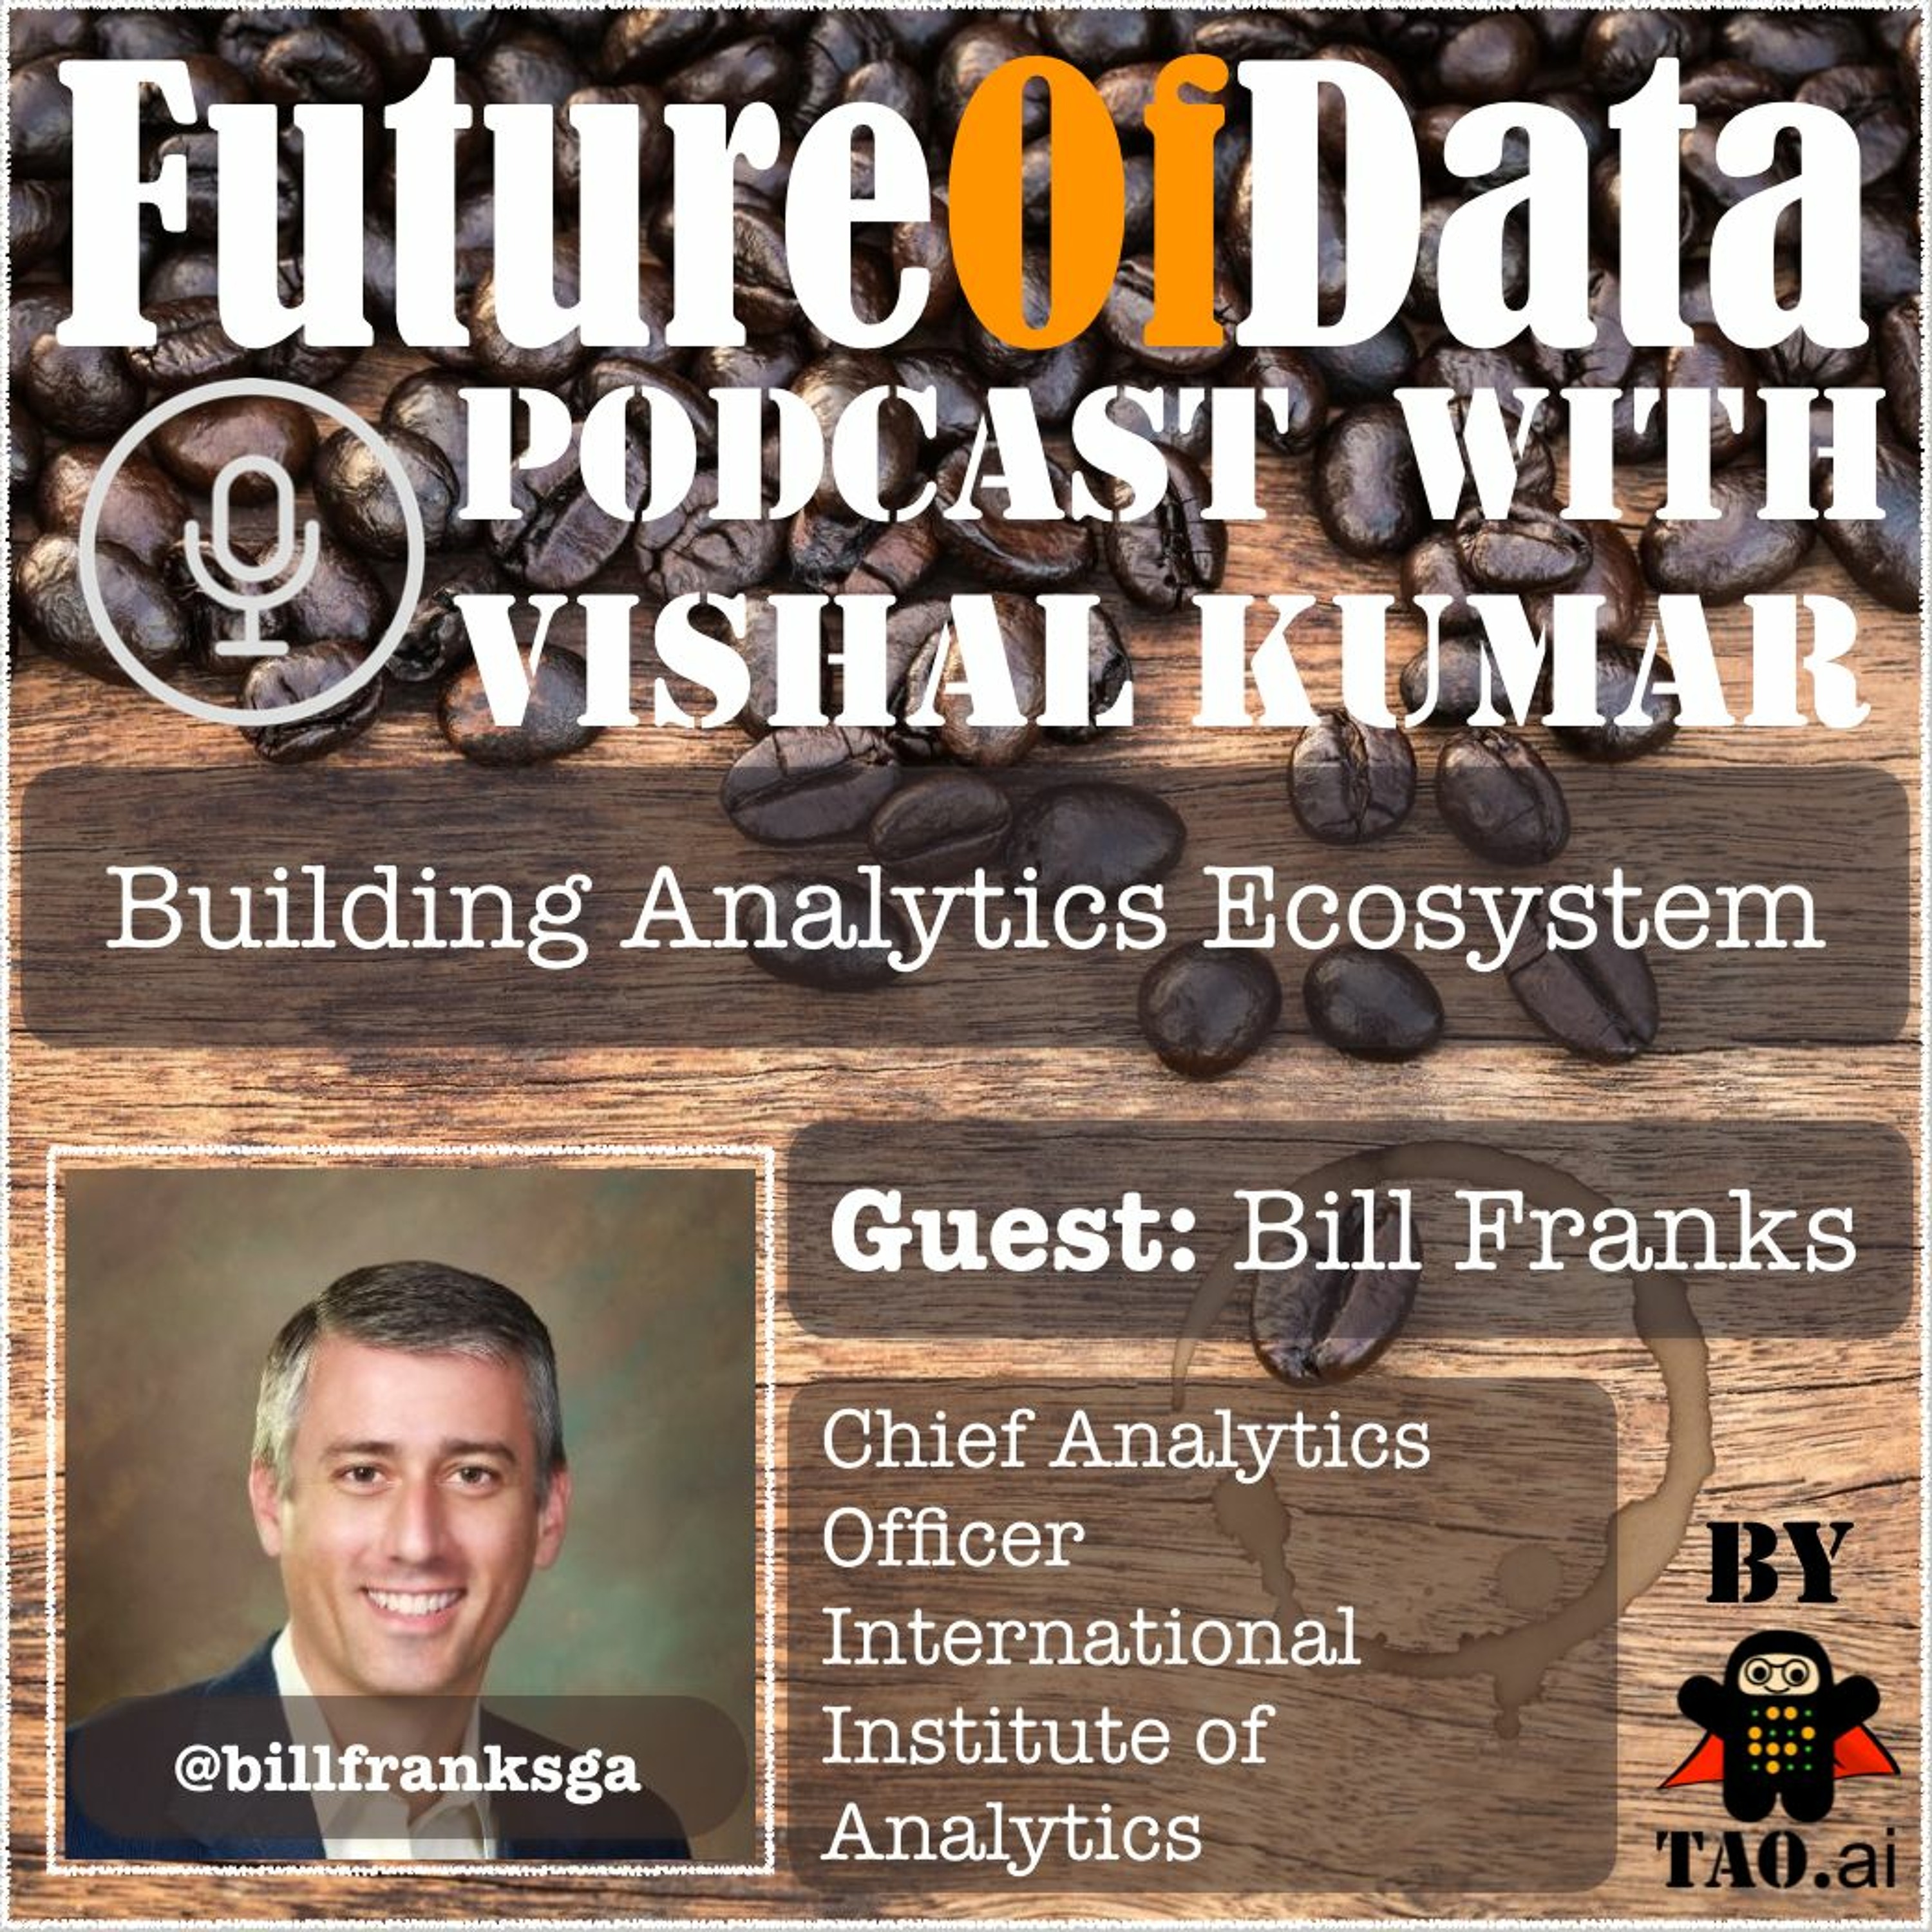 @BillFranksGA on The Ingredients of Successful Analytics Ecosystem #FutureOfData #Podcast